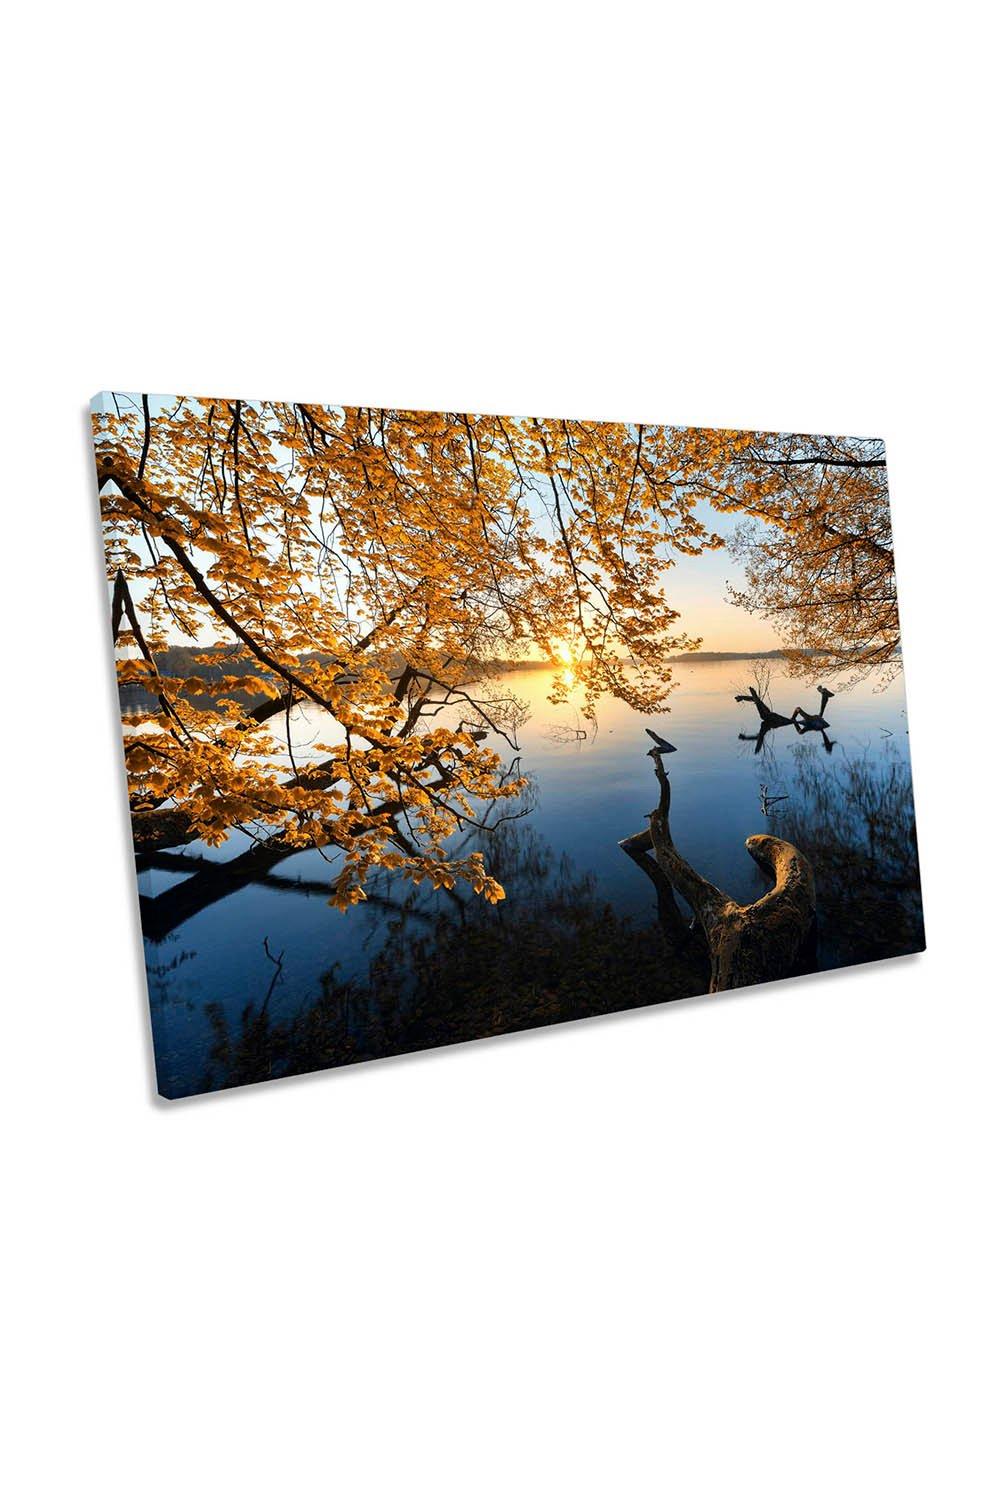 Autumn Morning Lake Sunrise Calm Canvas Wall Art Picture Print